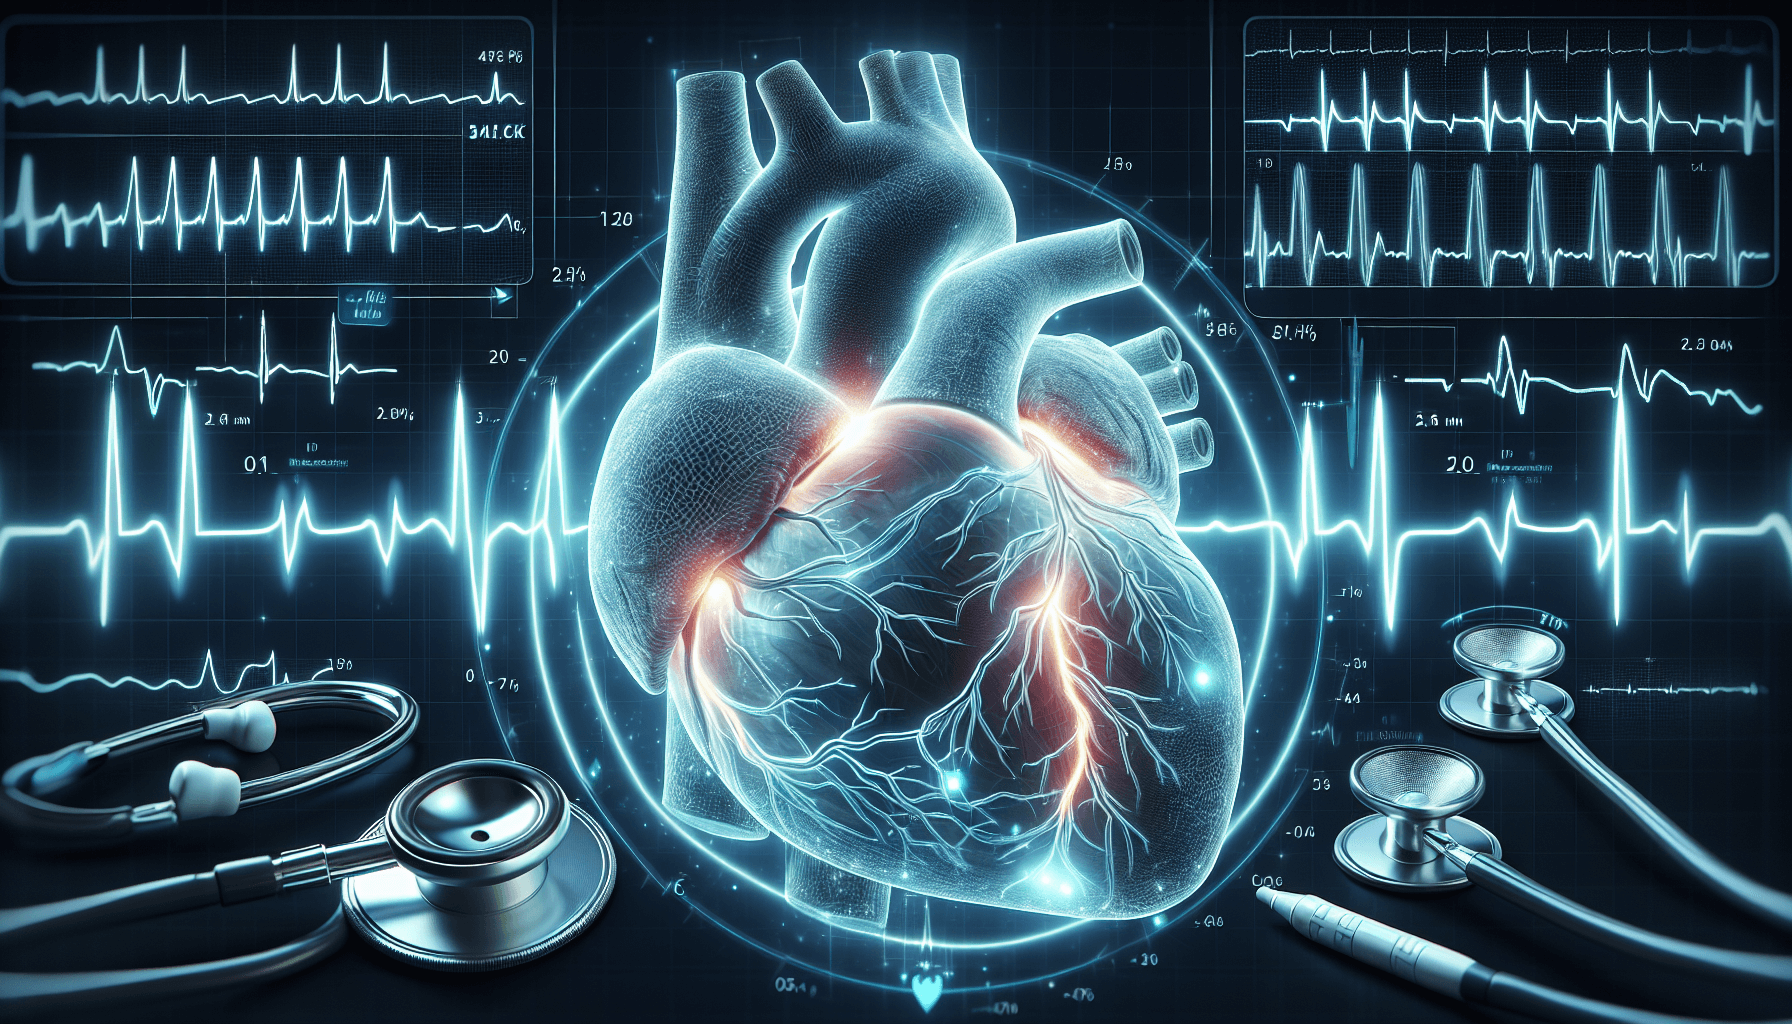 Illustration of a heart with irregular heart rhythm